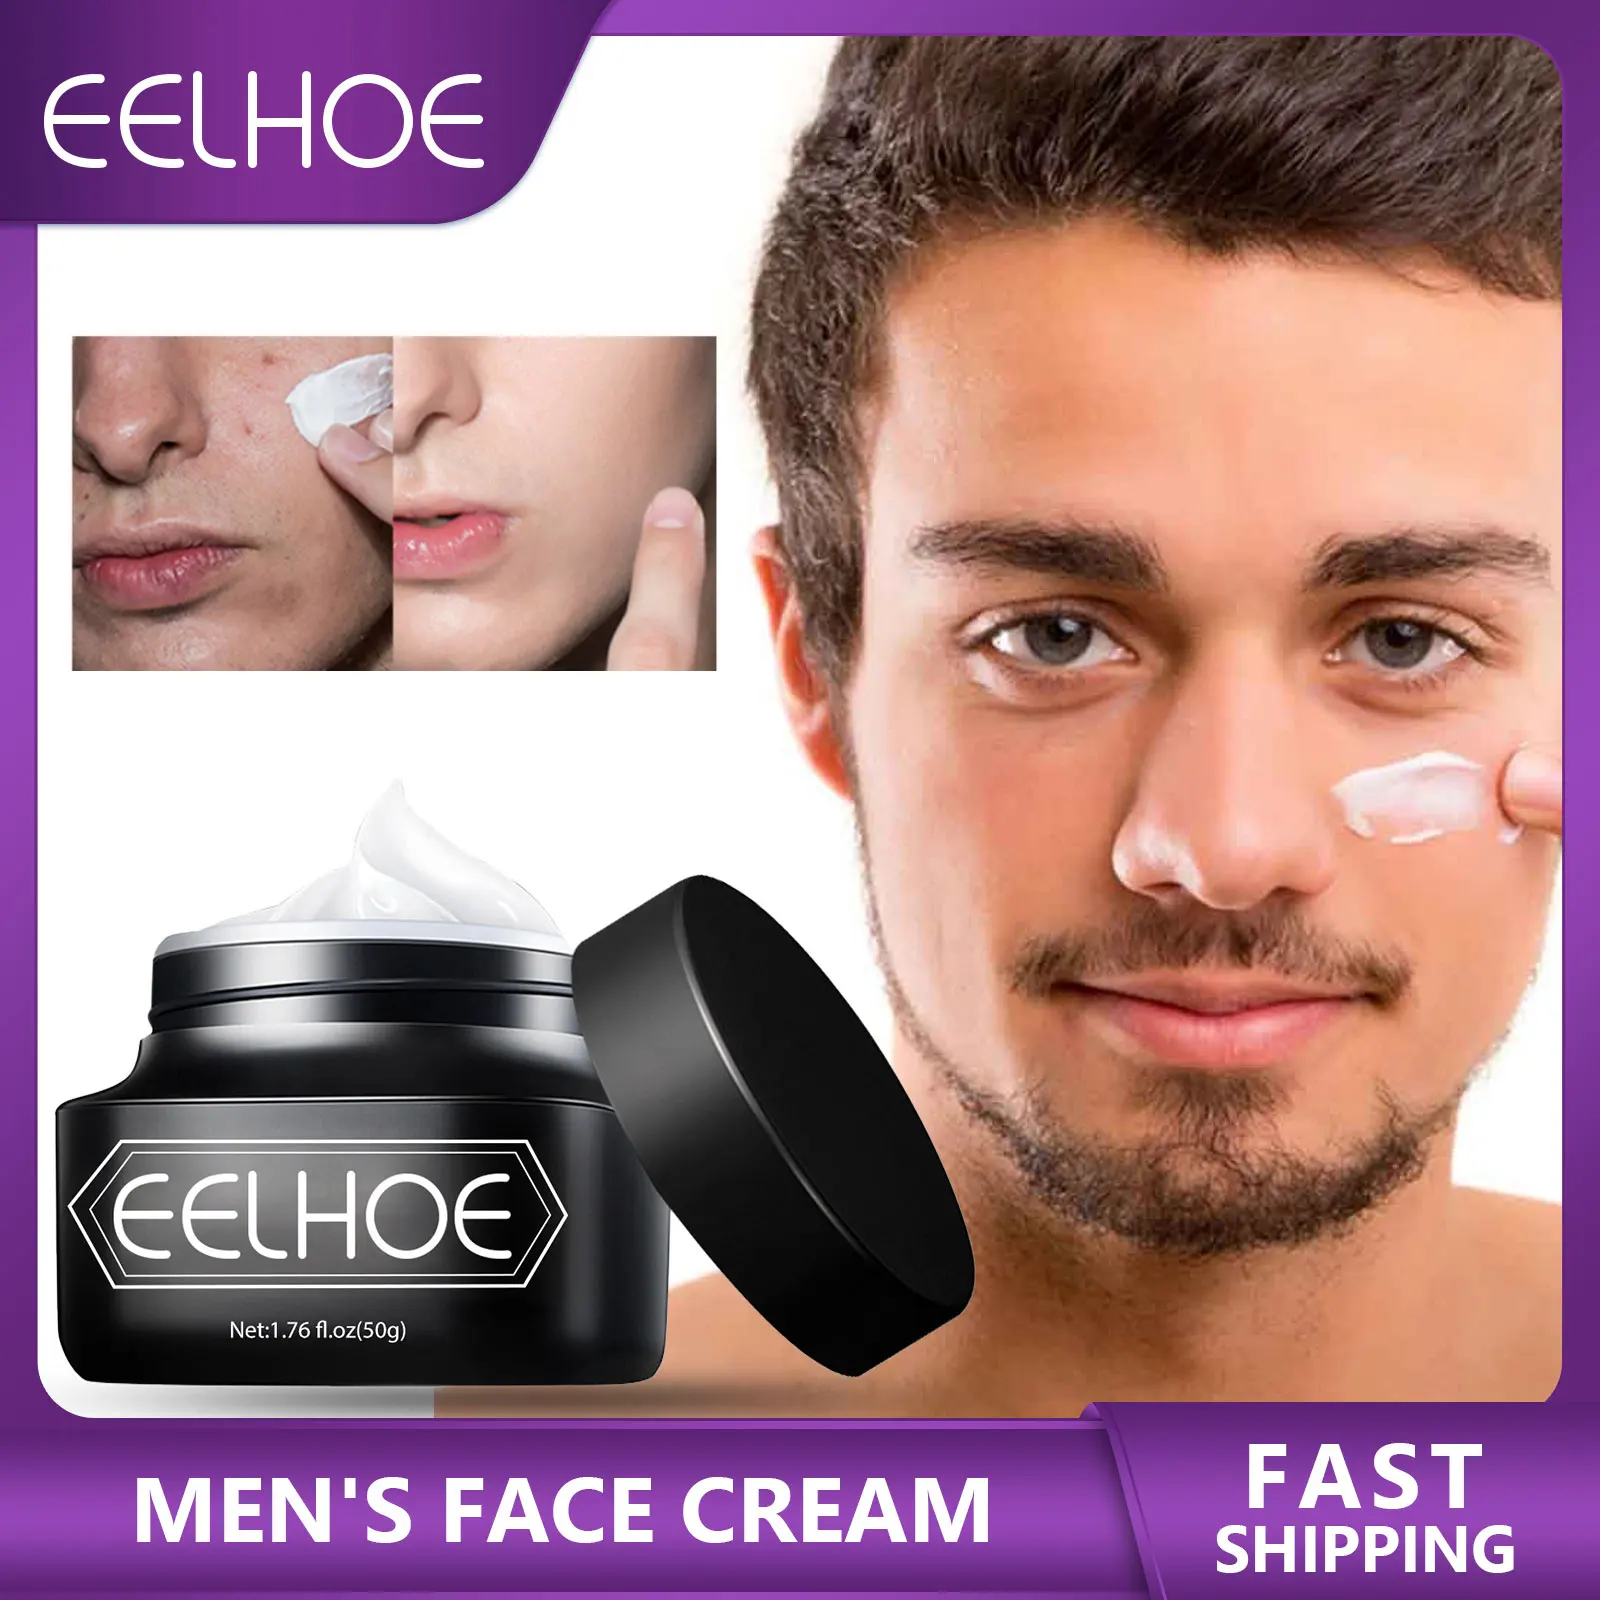 Men's Face Cream Concealer Covers Acne Shrink Pores Brighten Skin Repair Dry Rough Skin Refreshing Not Greasy Facial Care